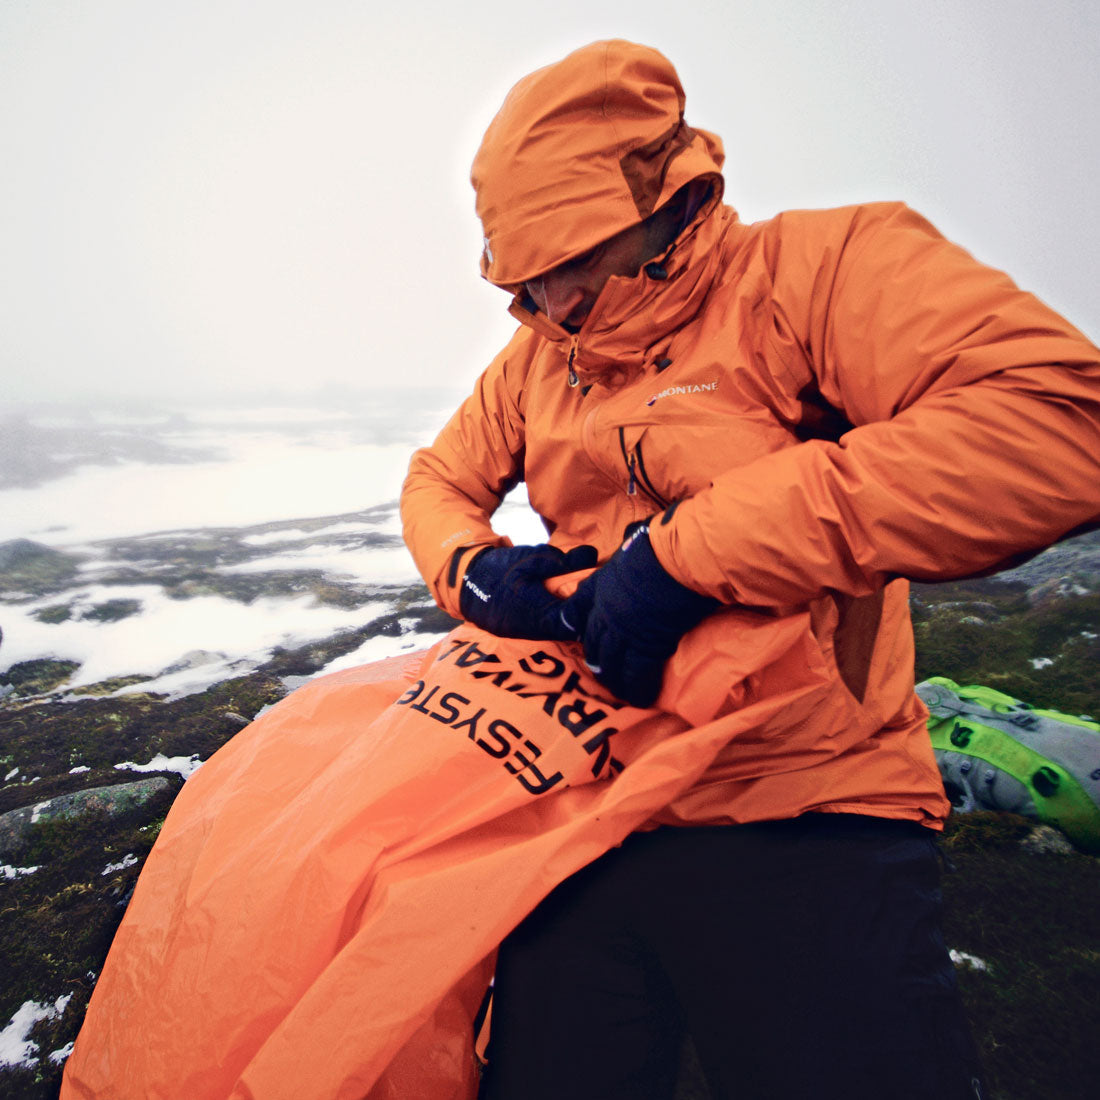 2-Person Marine Survival Bag for Water Emergencies